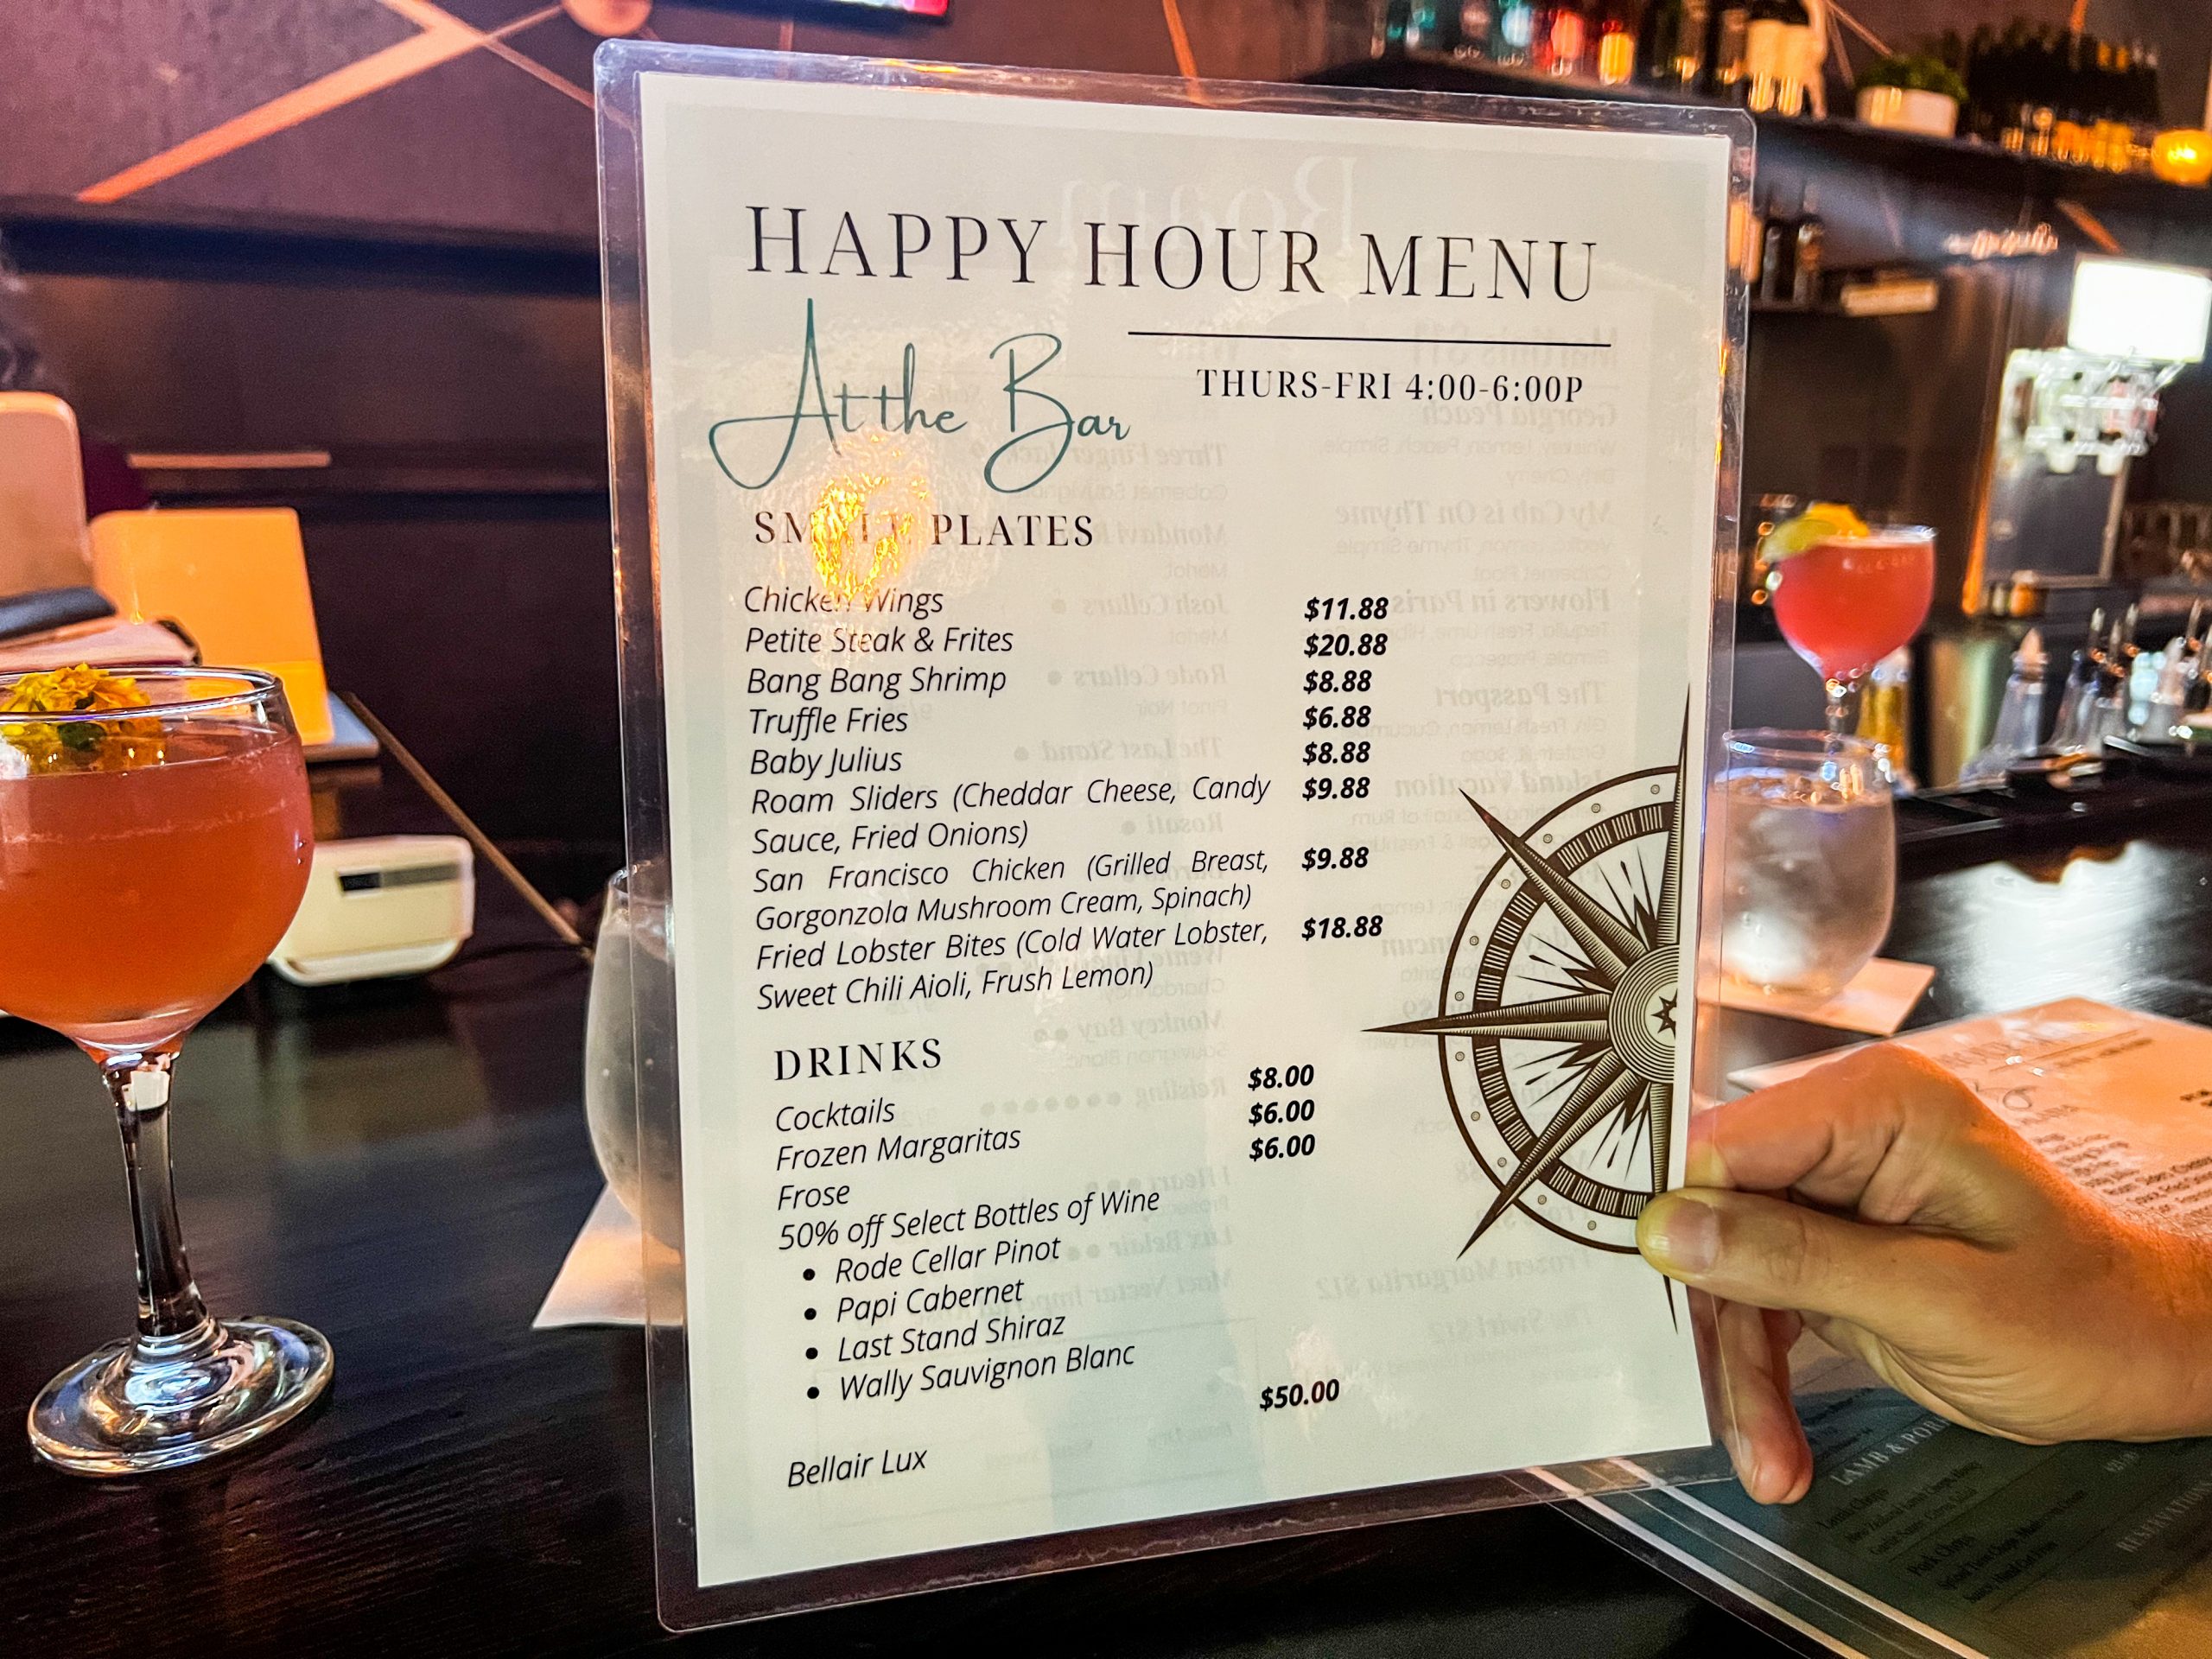 The irresistable happy hour menu at Roam